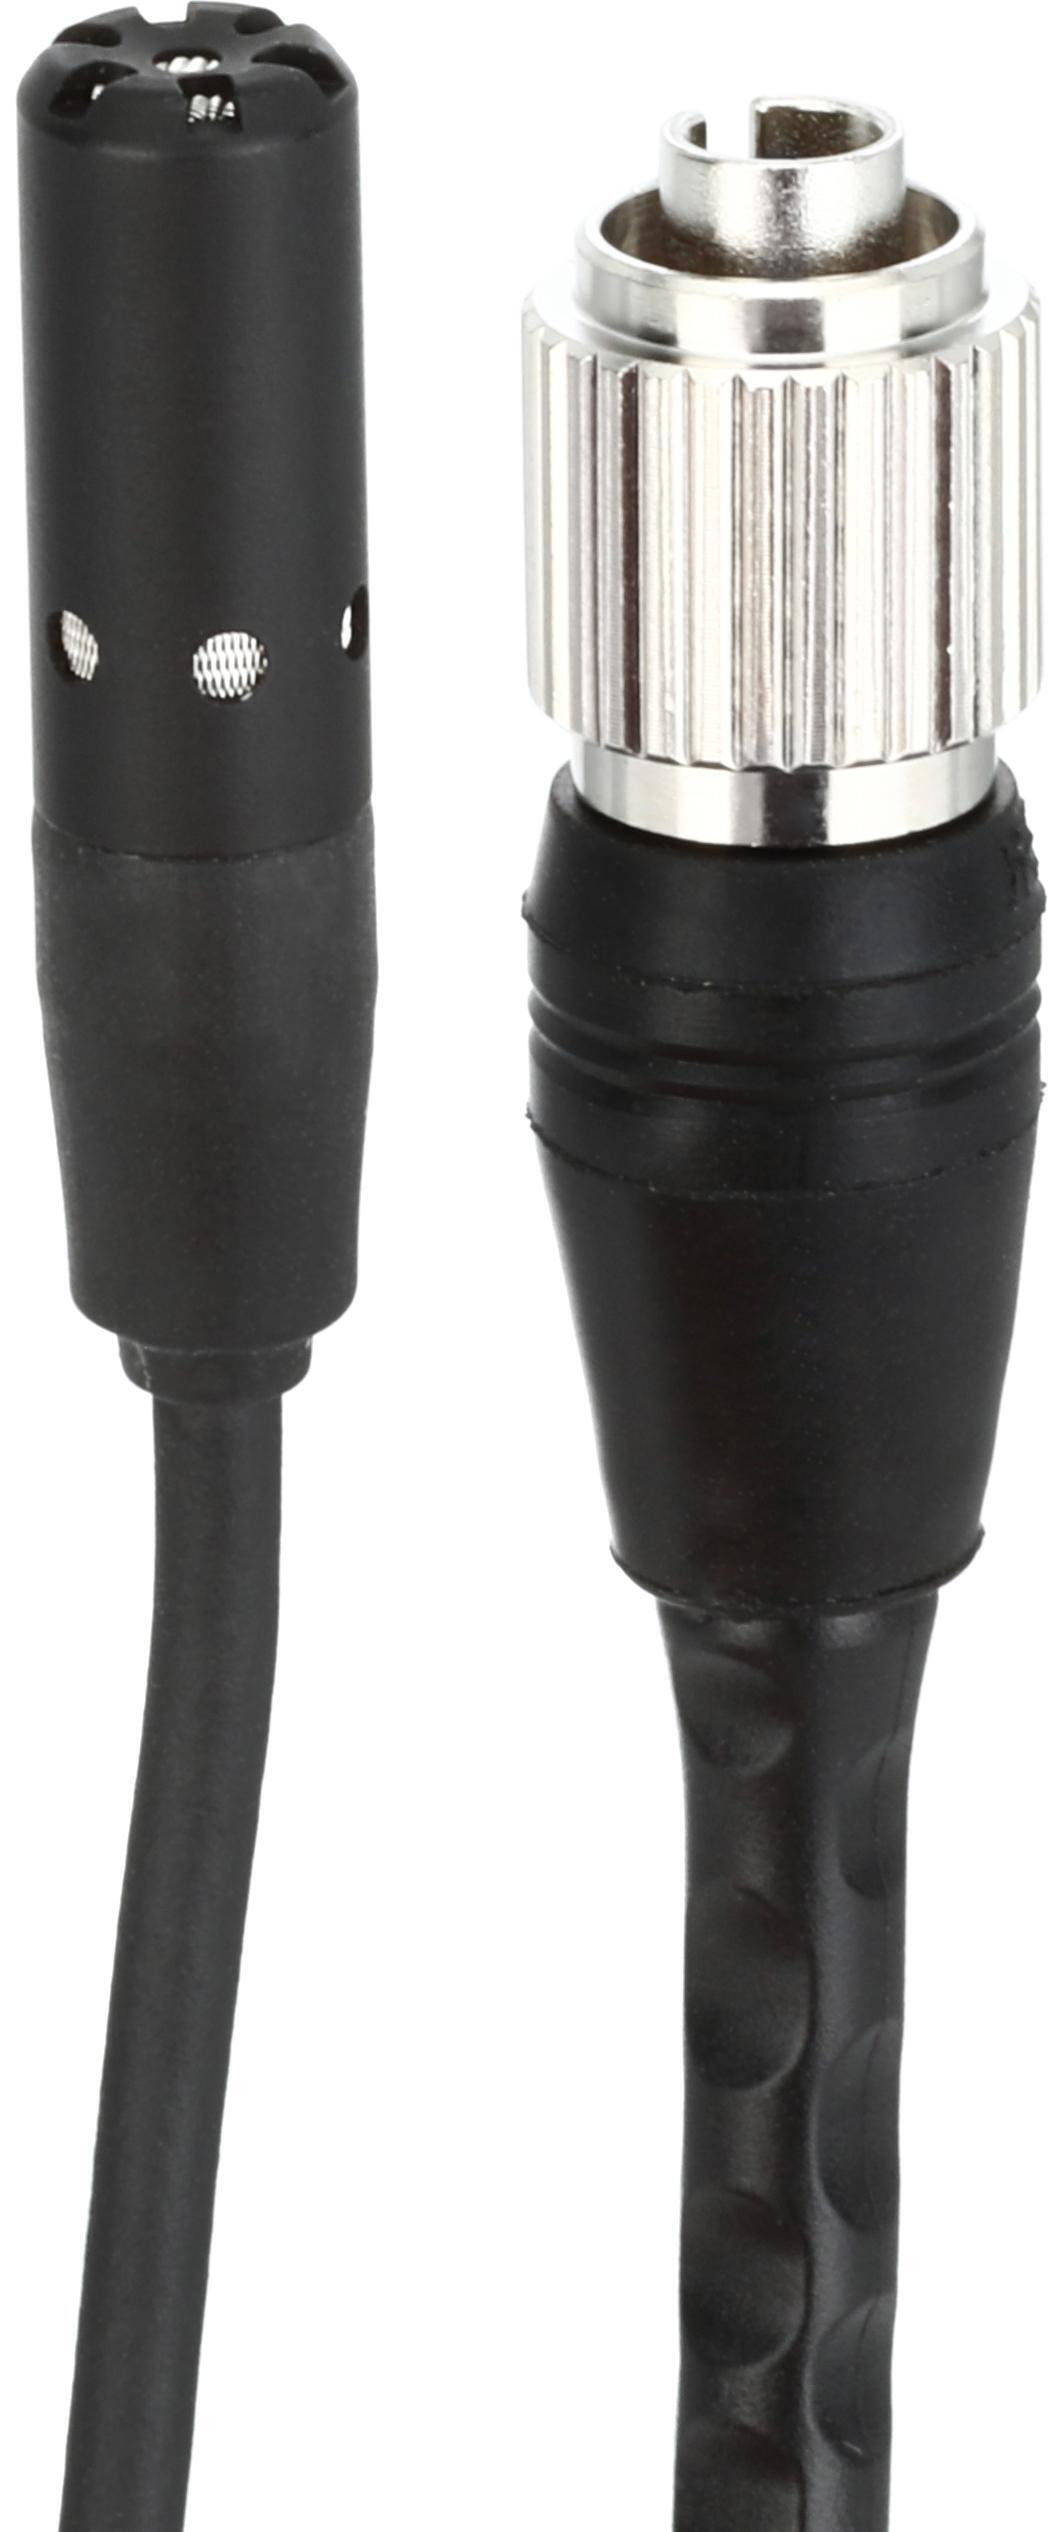 Audio-Technica BP898 Subminiature Cardioid Lavalier Microphone for